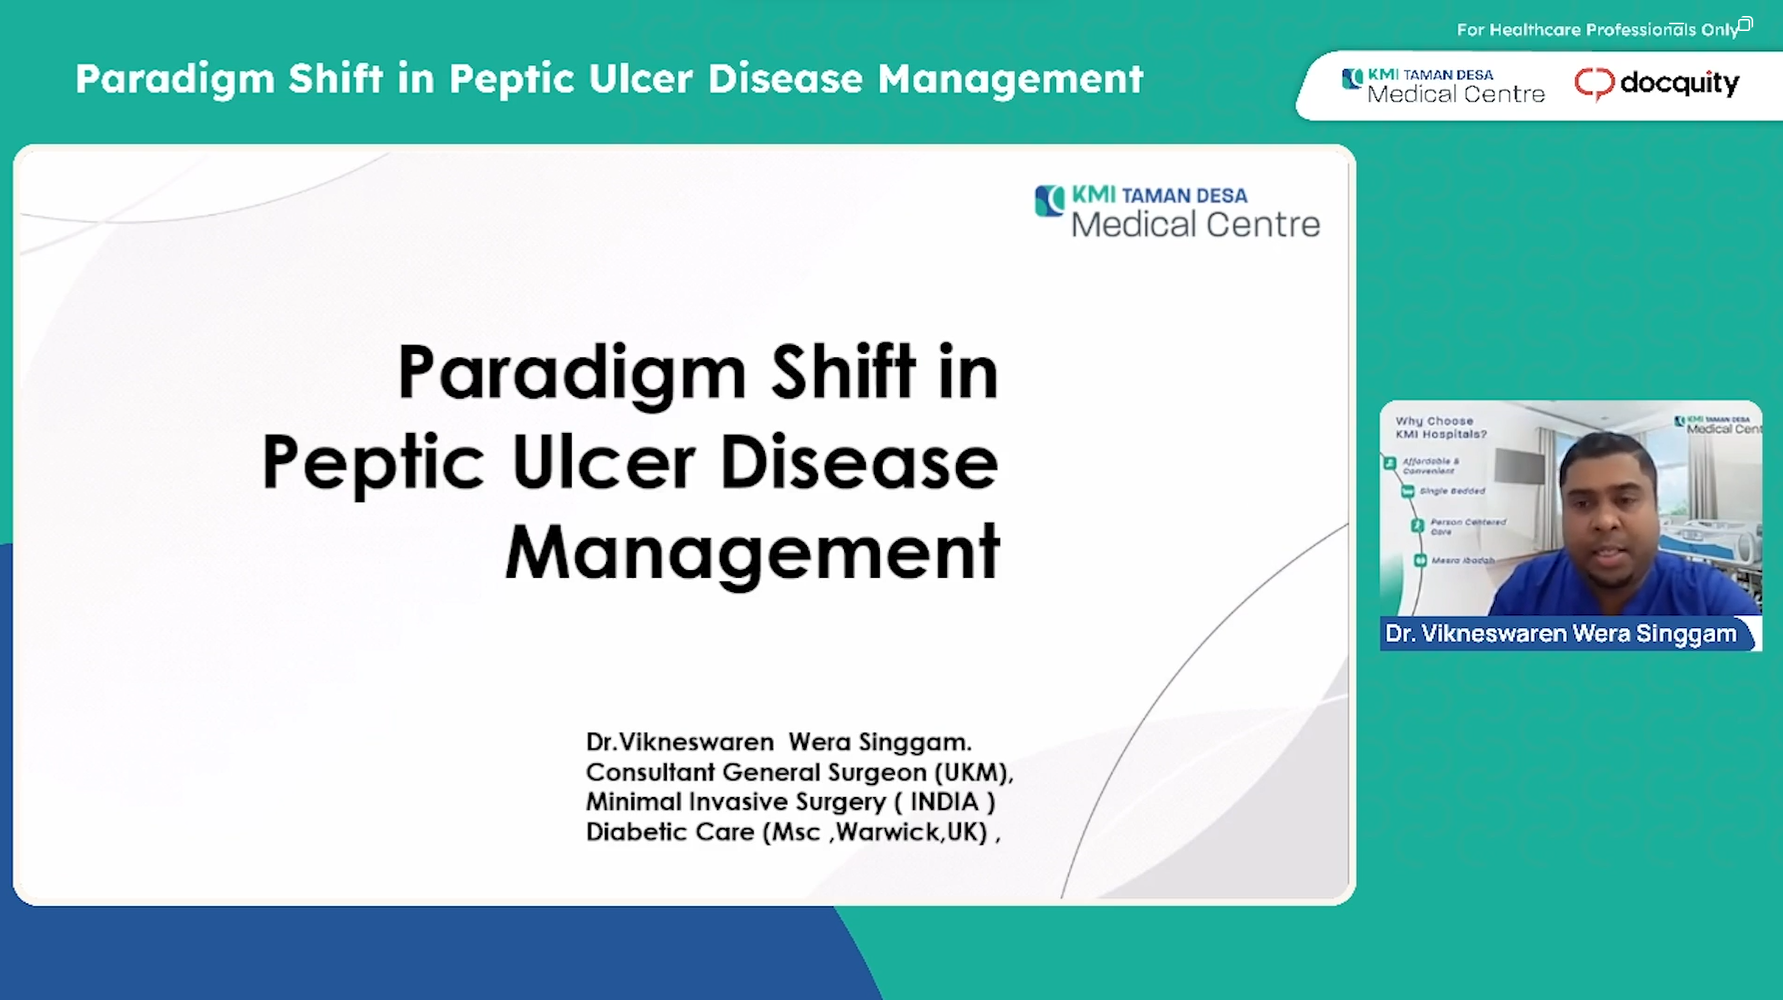 Paradigm shift in Peptic Ulcer Diseases Management by Dr. Vikneswaren Wera Singgam